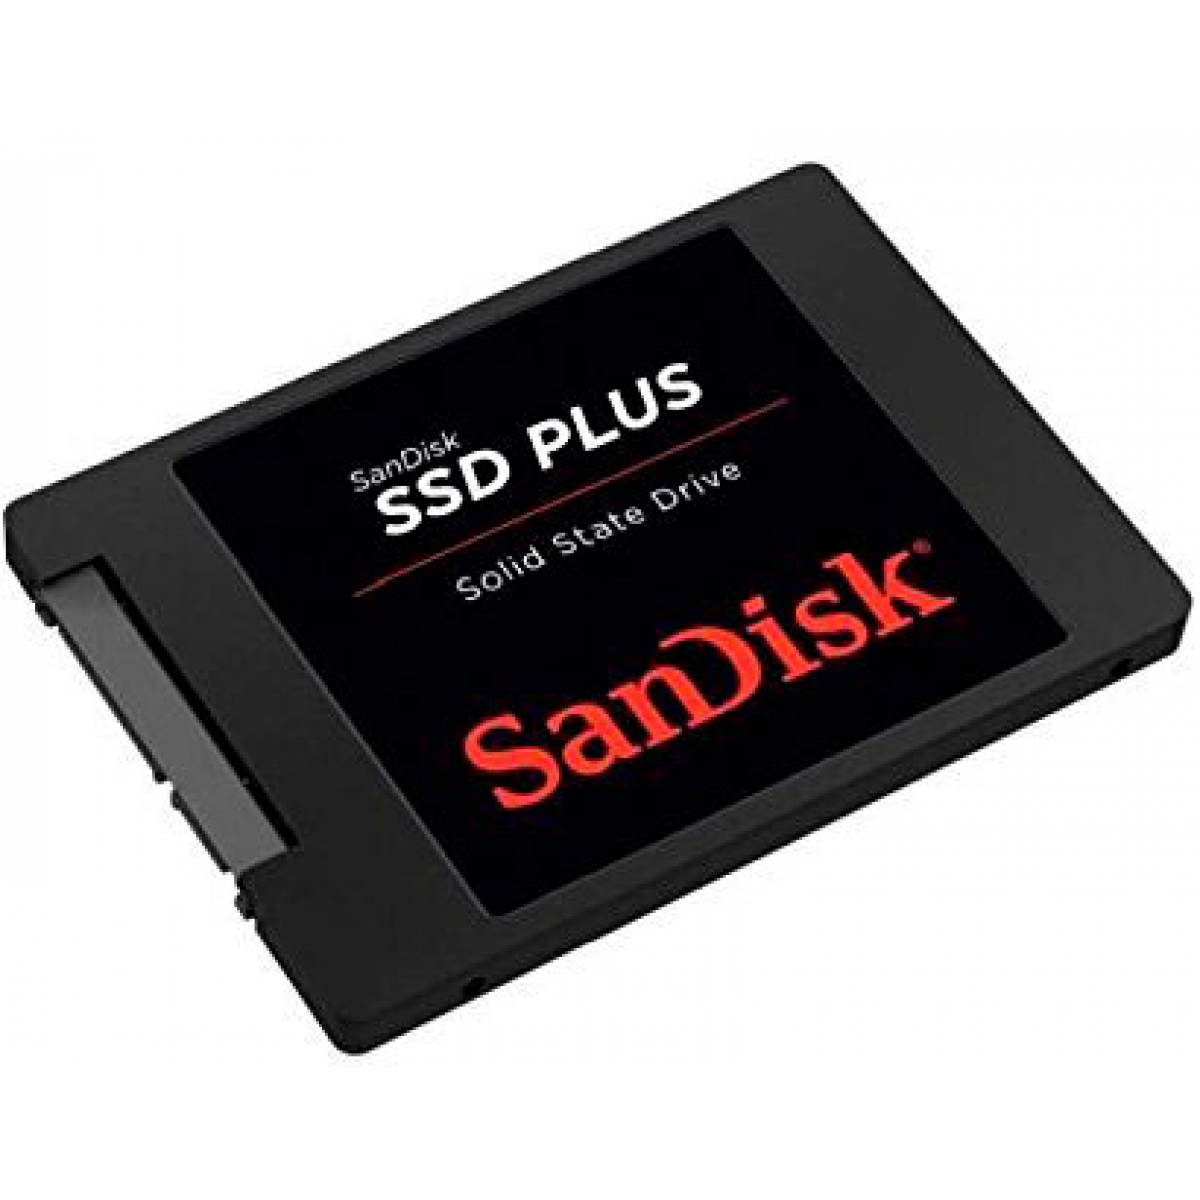 SSD Sandisk Plus, 240GB, Sata III, Leitura 530MBs e Gravação 440MBs, SDSSDA-240G-G26